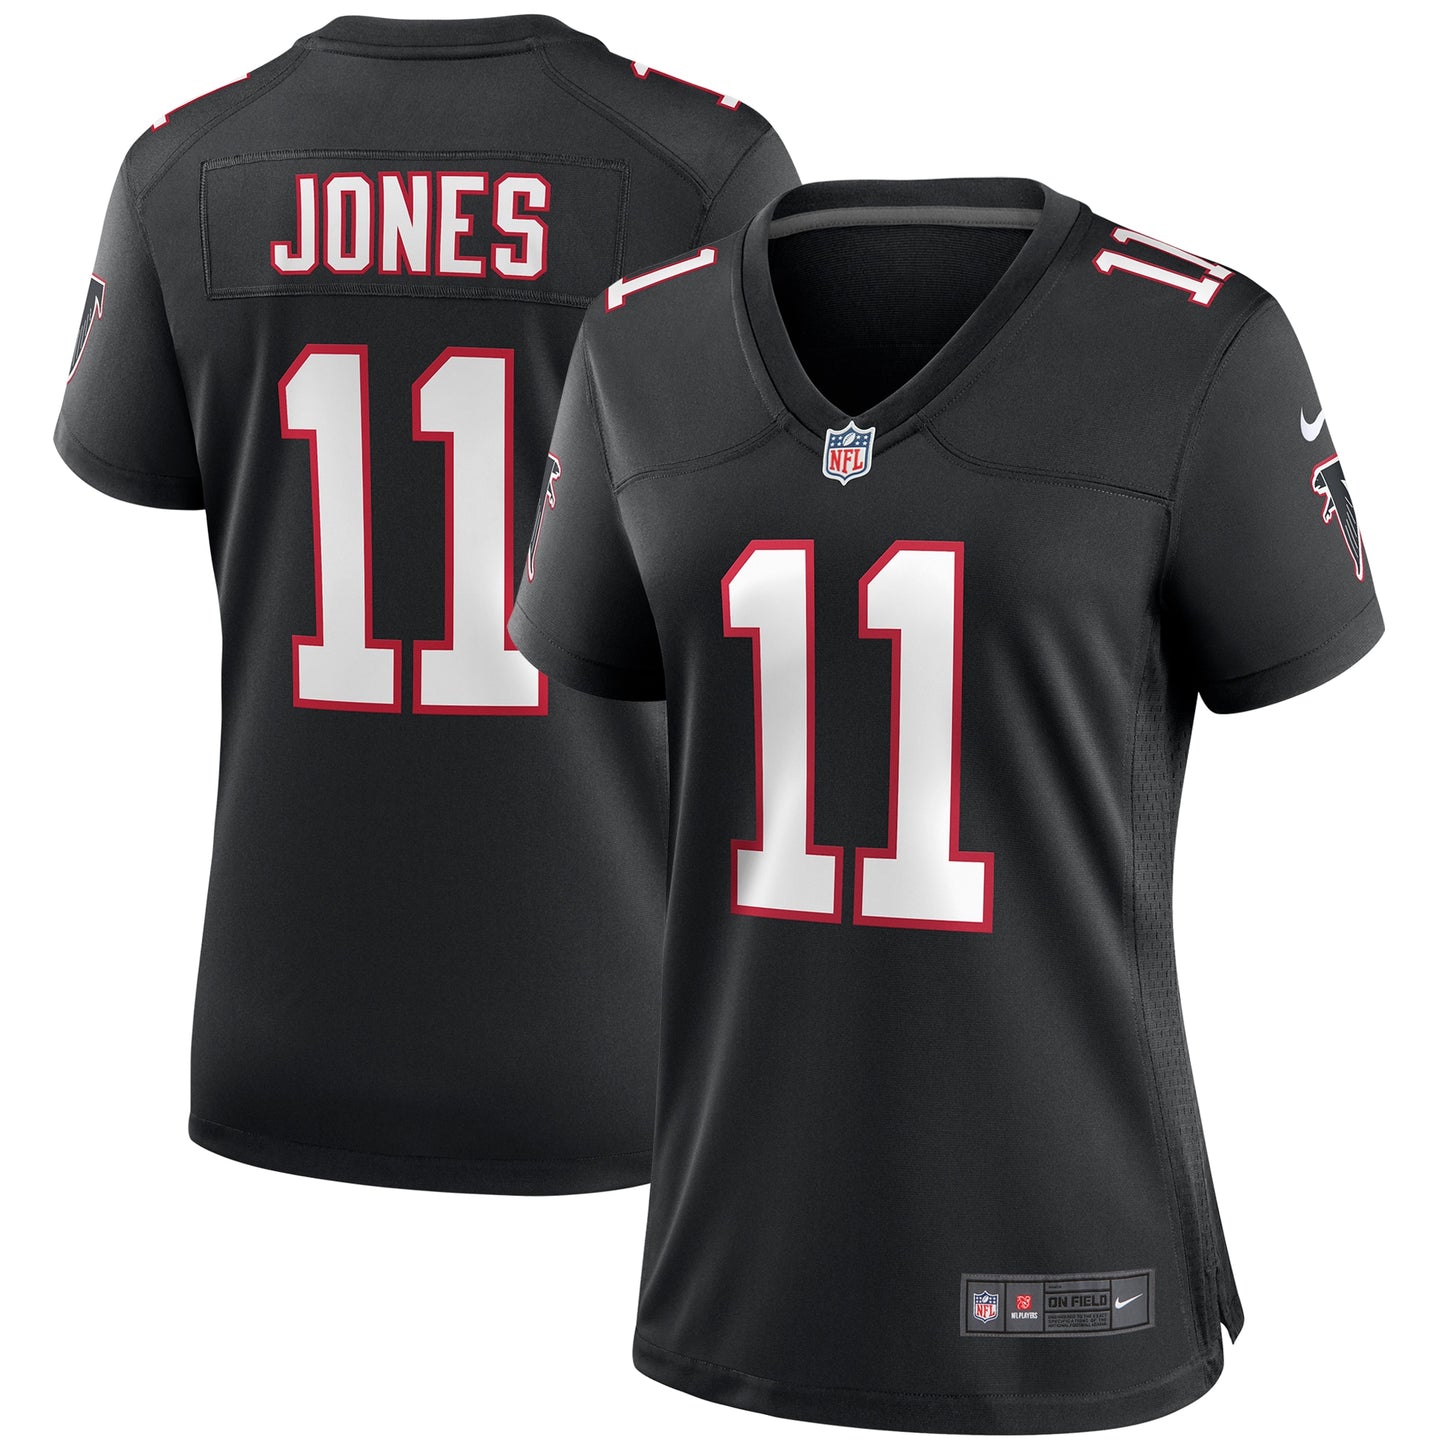 Julio Jones Atlanta Falcons Nike Women's Throwback Game Jersey - Black